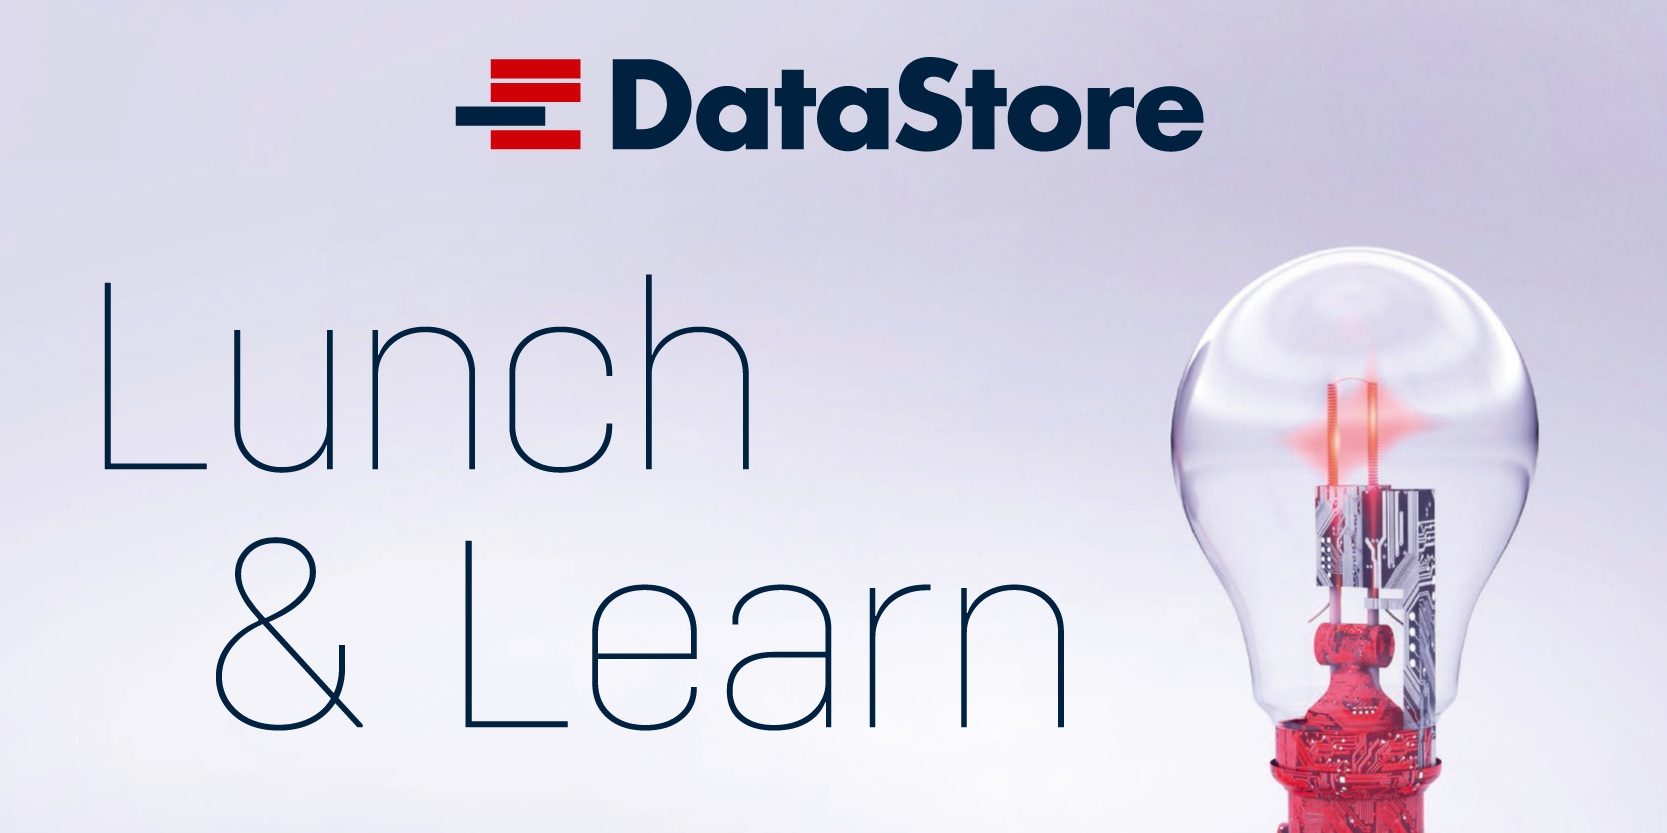 Lunch & Learn DataStore Barracuda